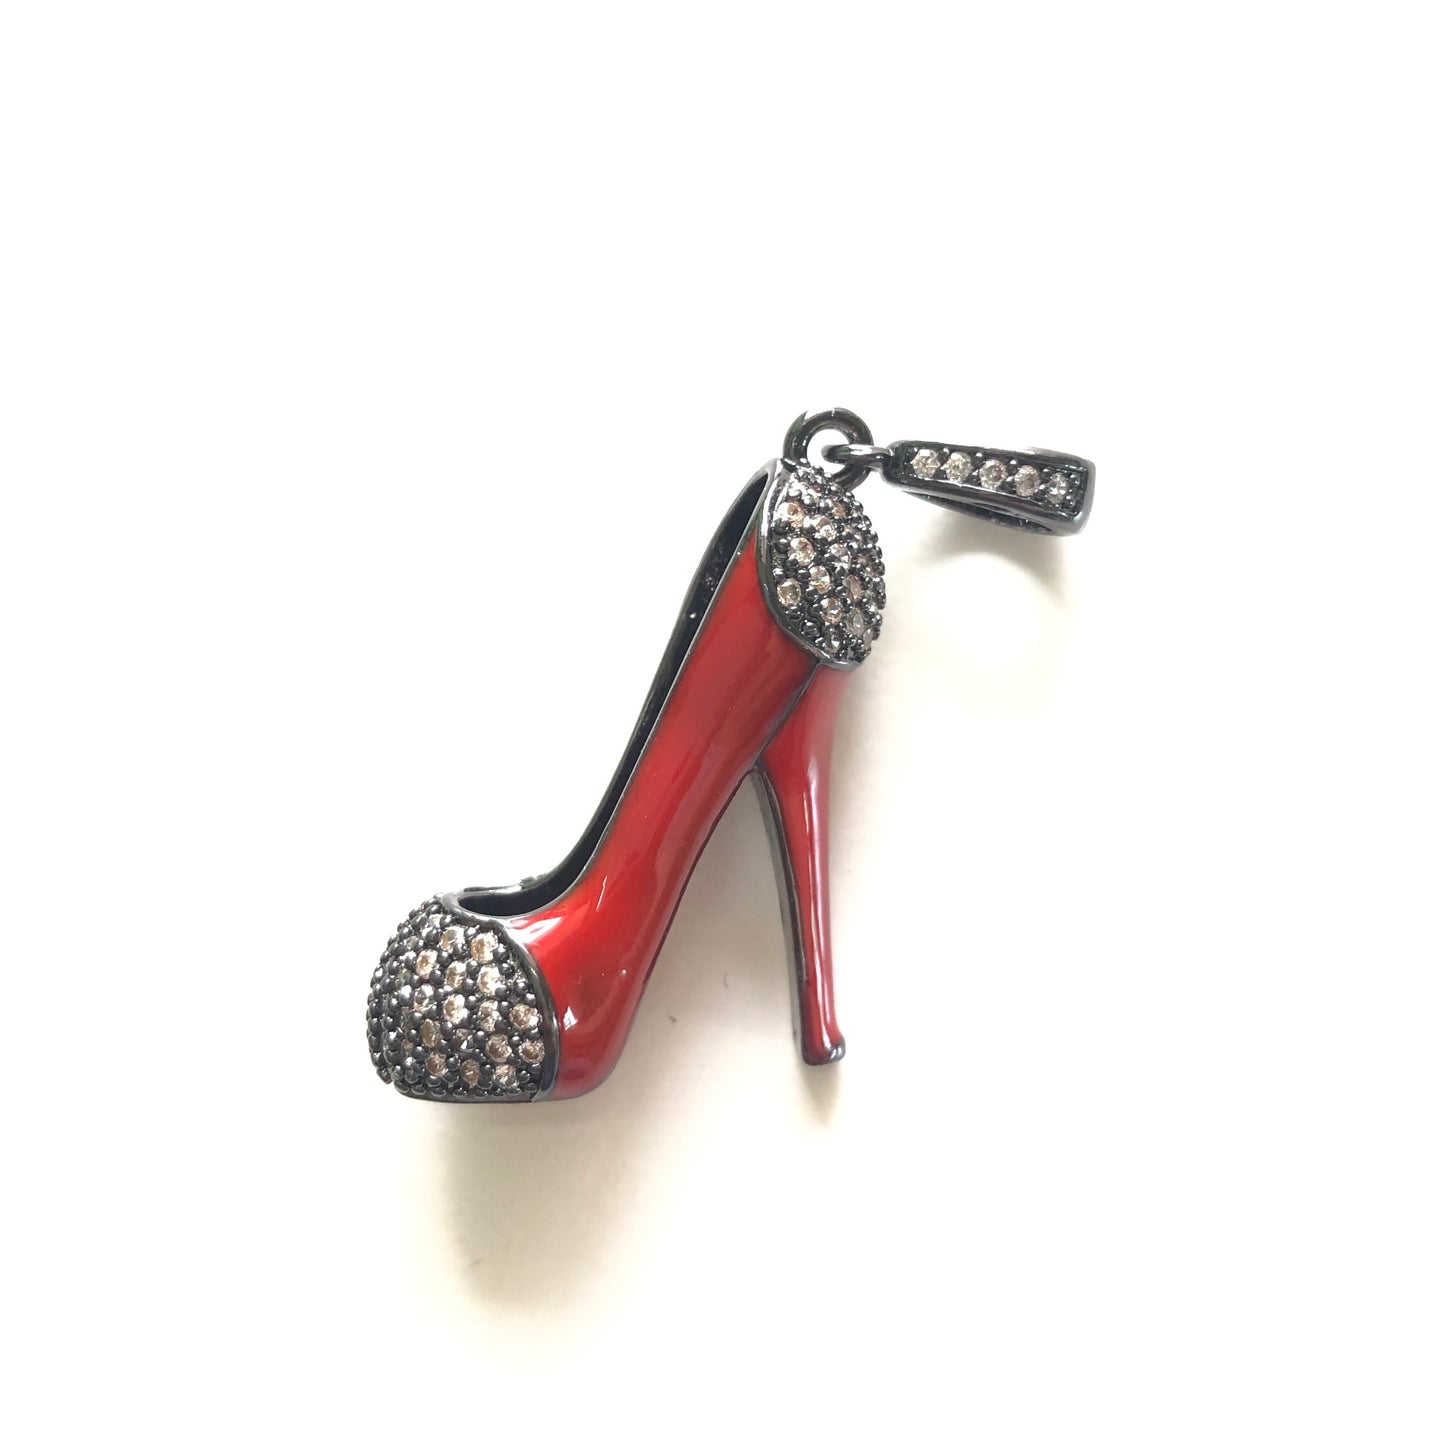 10pcs/lot 30*26mm CZ Paved Red High Heel Shoe Charms Black CZ Paved Charms High Heels On Sale Charms Beads Beyond